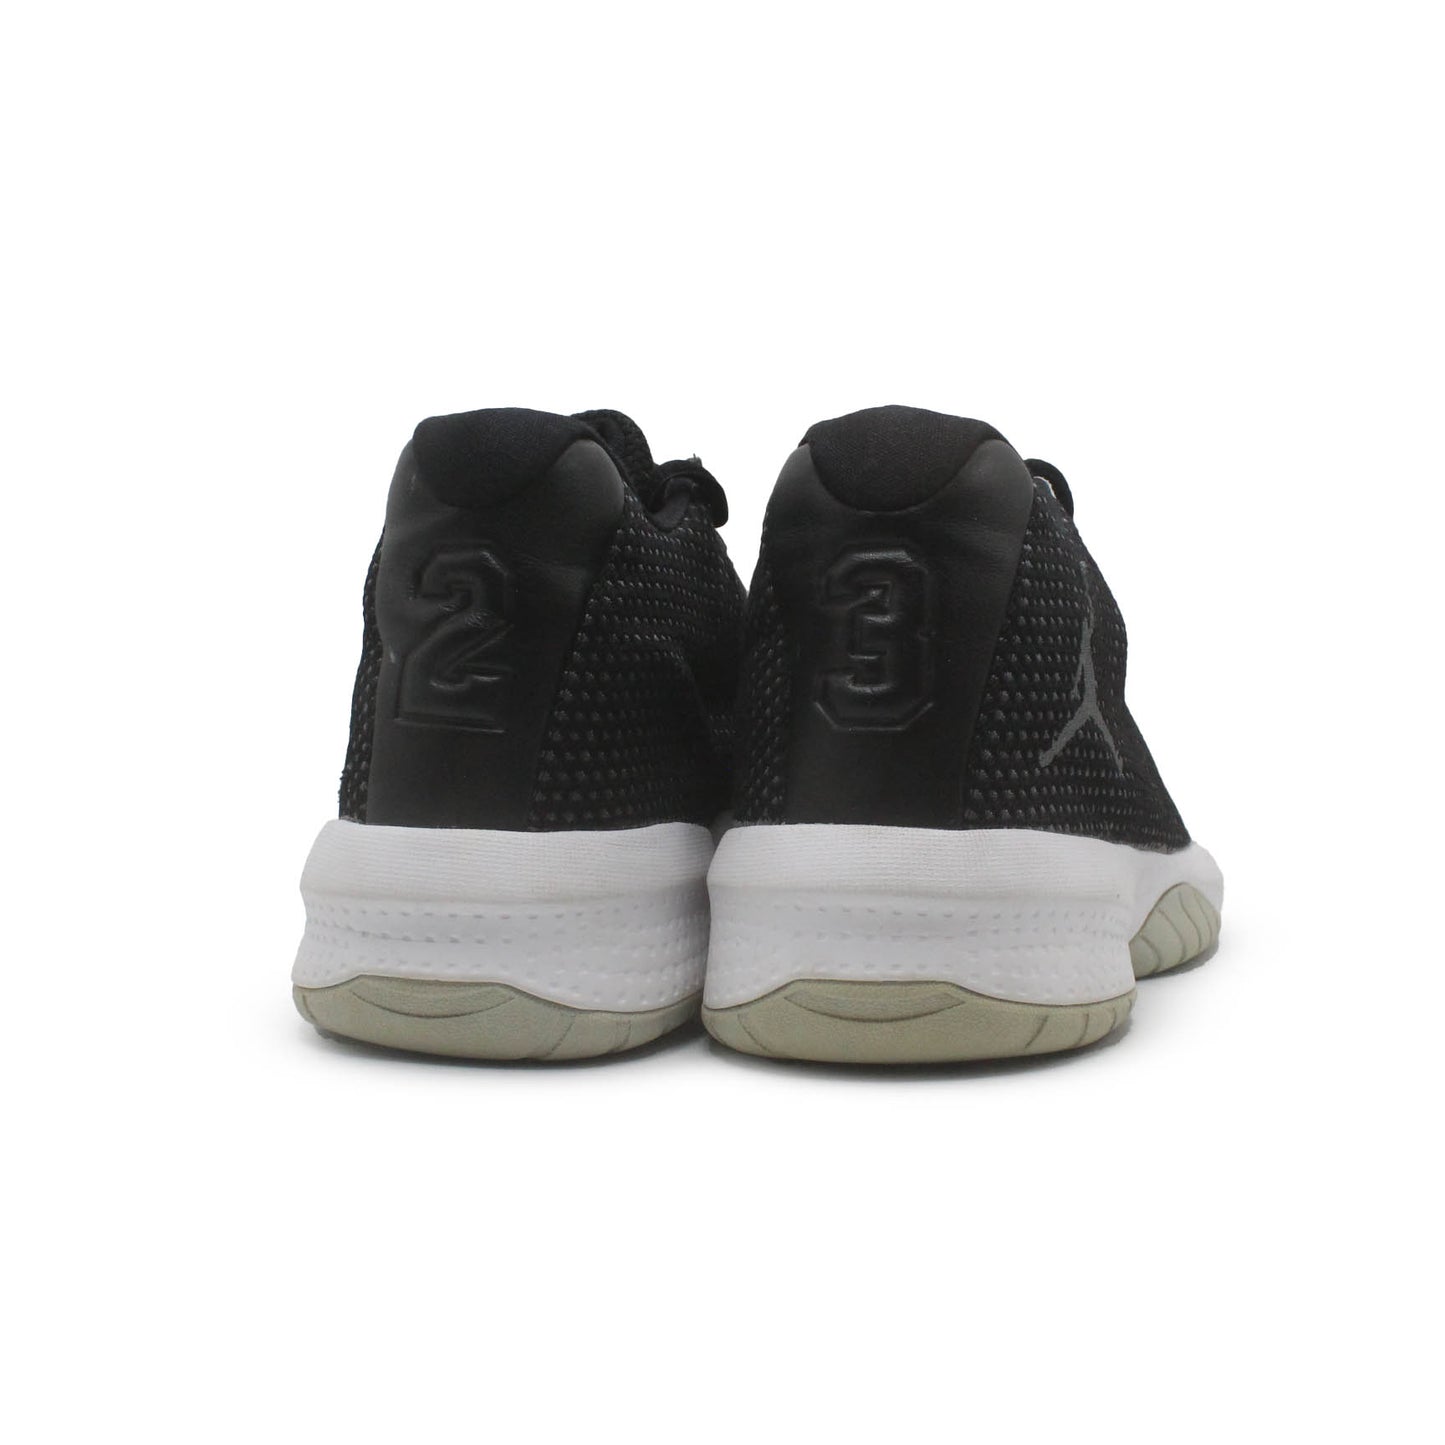 Jordan B Fly Basketball Shoe